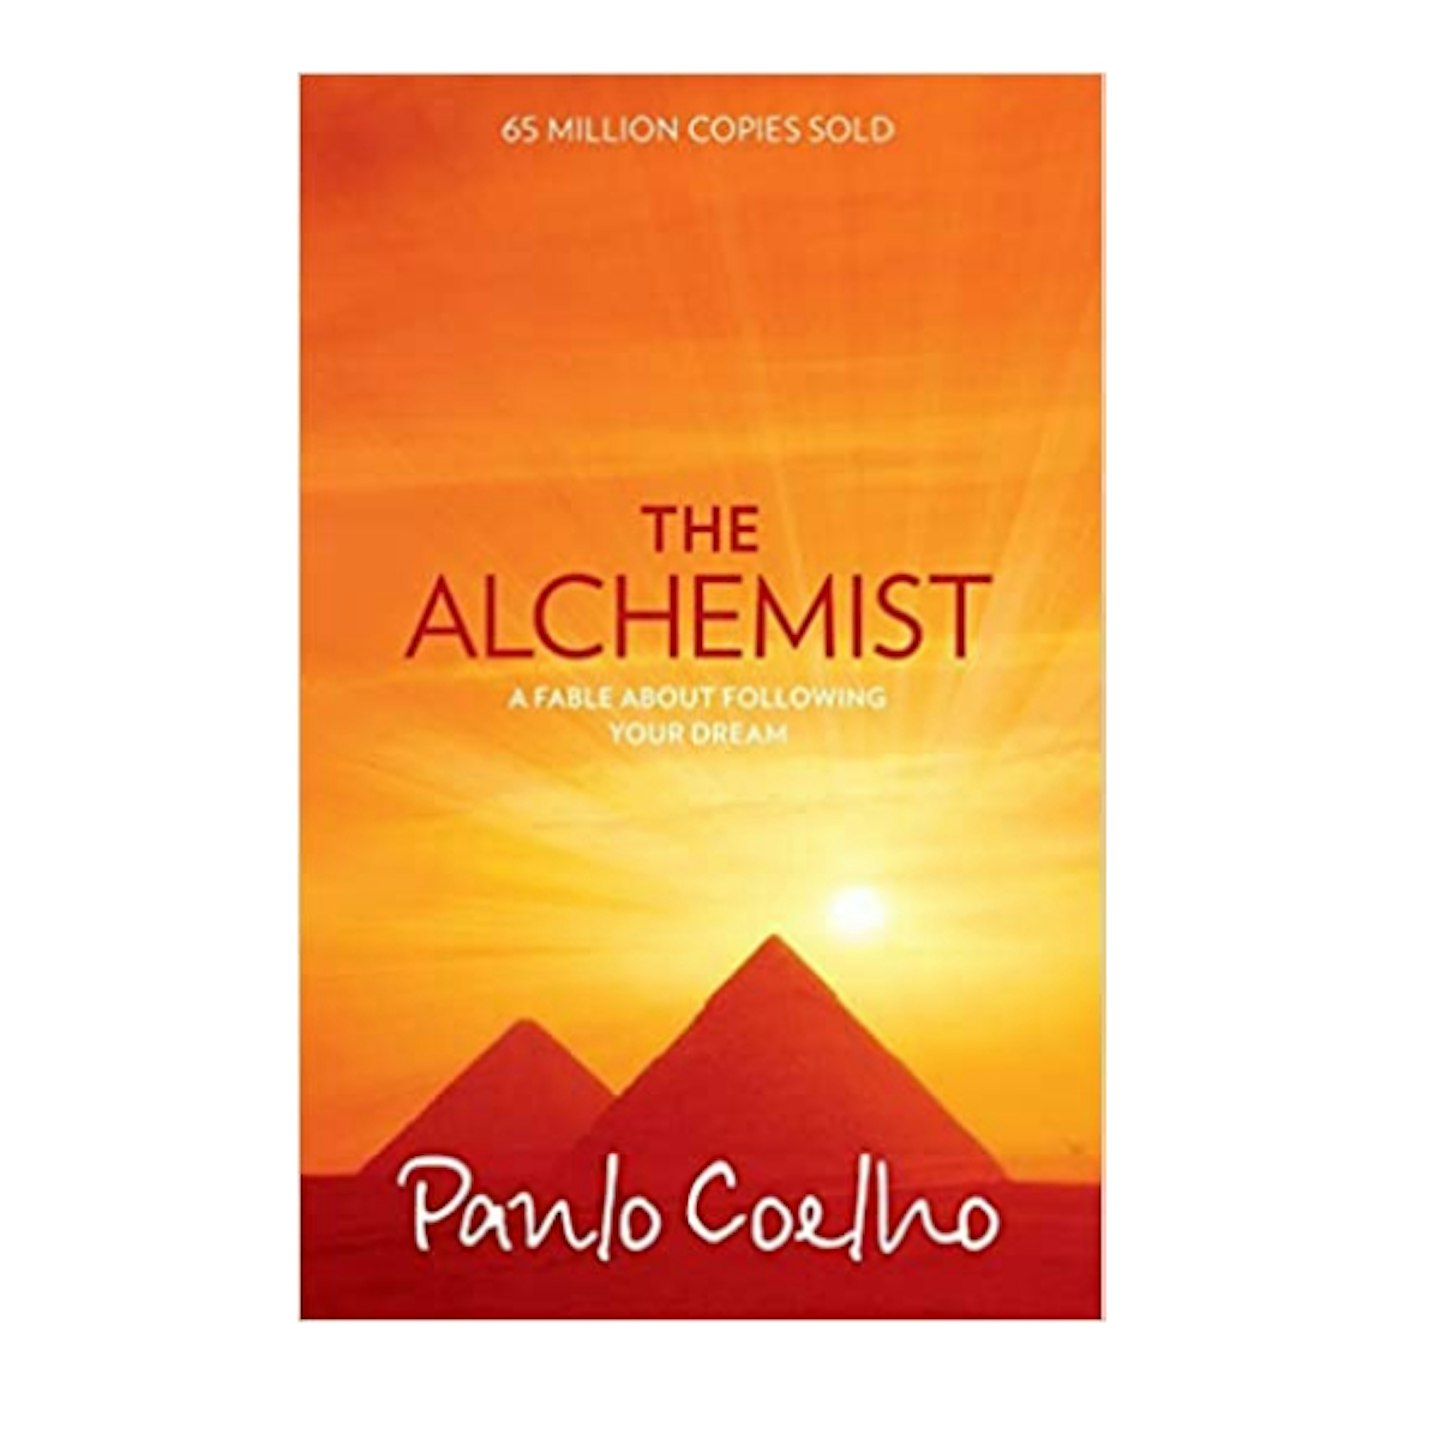 The Alchemist orange book cover